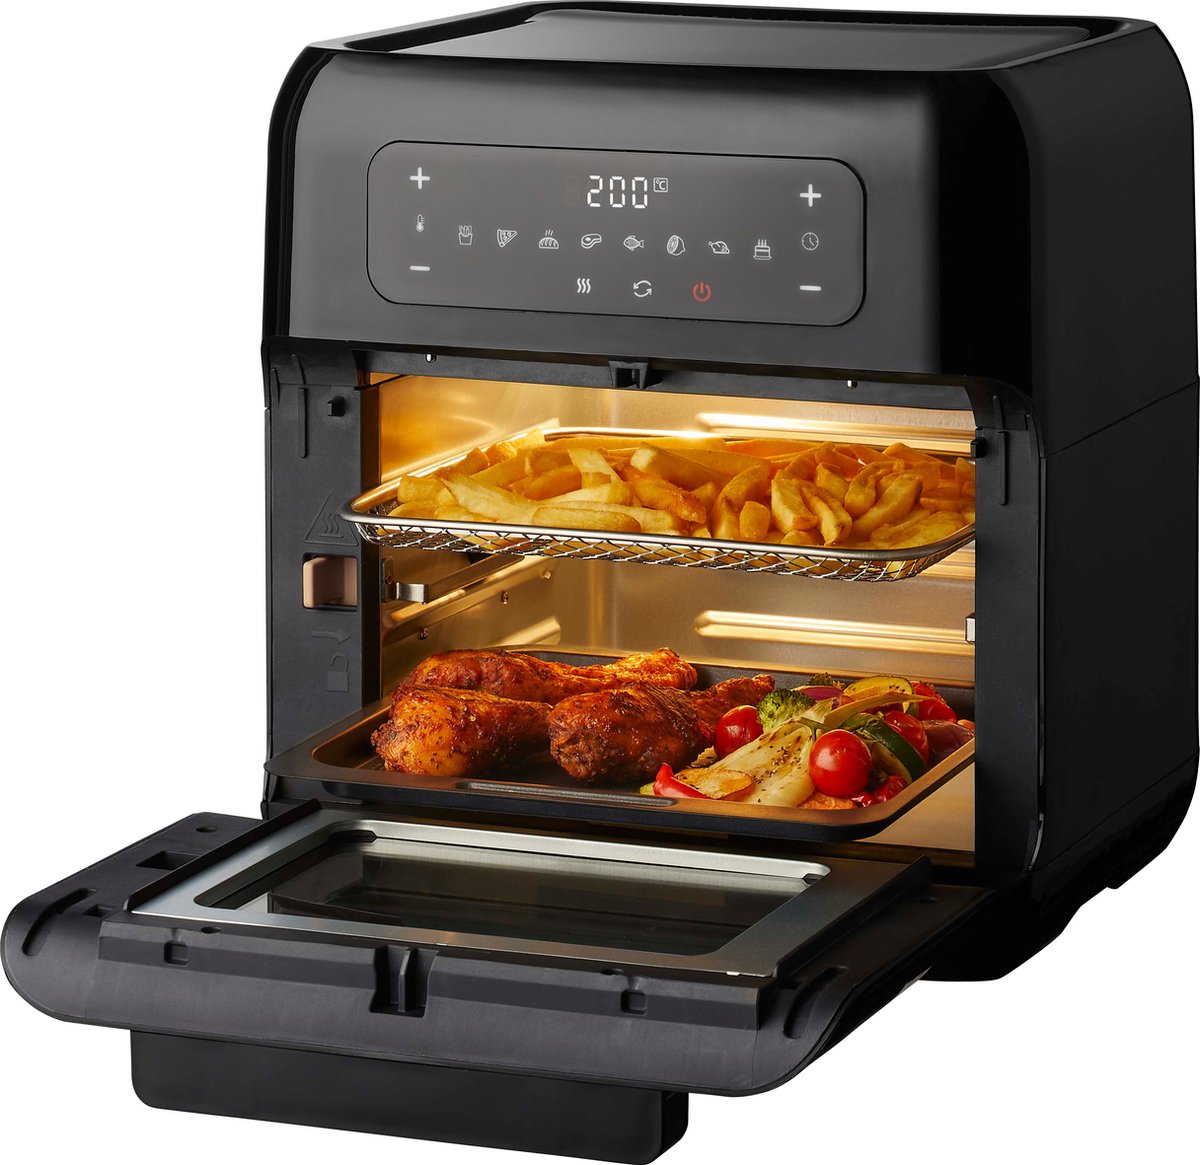 Tomado TAF1201B - Airfryer oven - Hetelucht friteuse - 12 liter - 8 programma's - 40 tot 210°C - 1500 watt - Zwart - Tomado